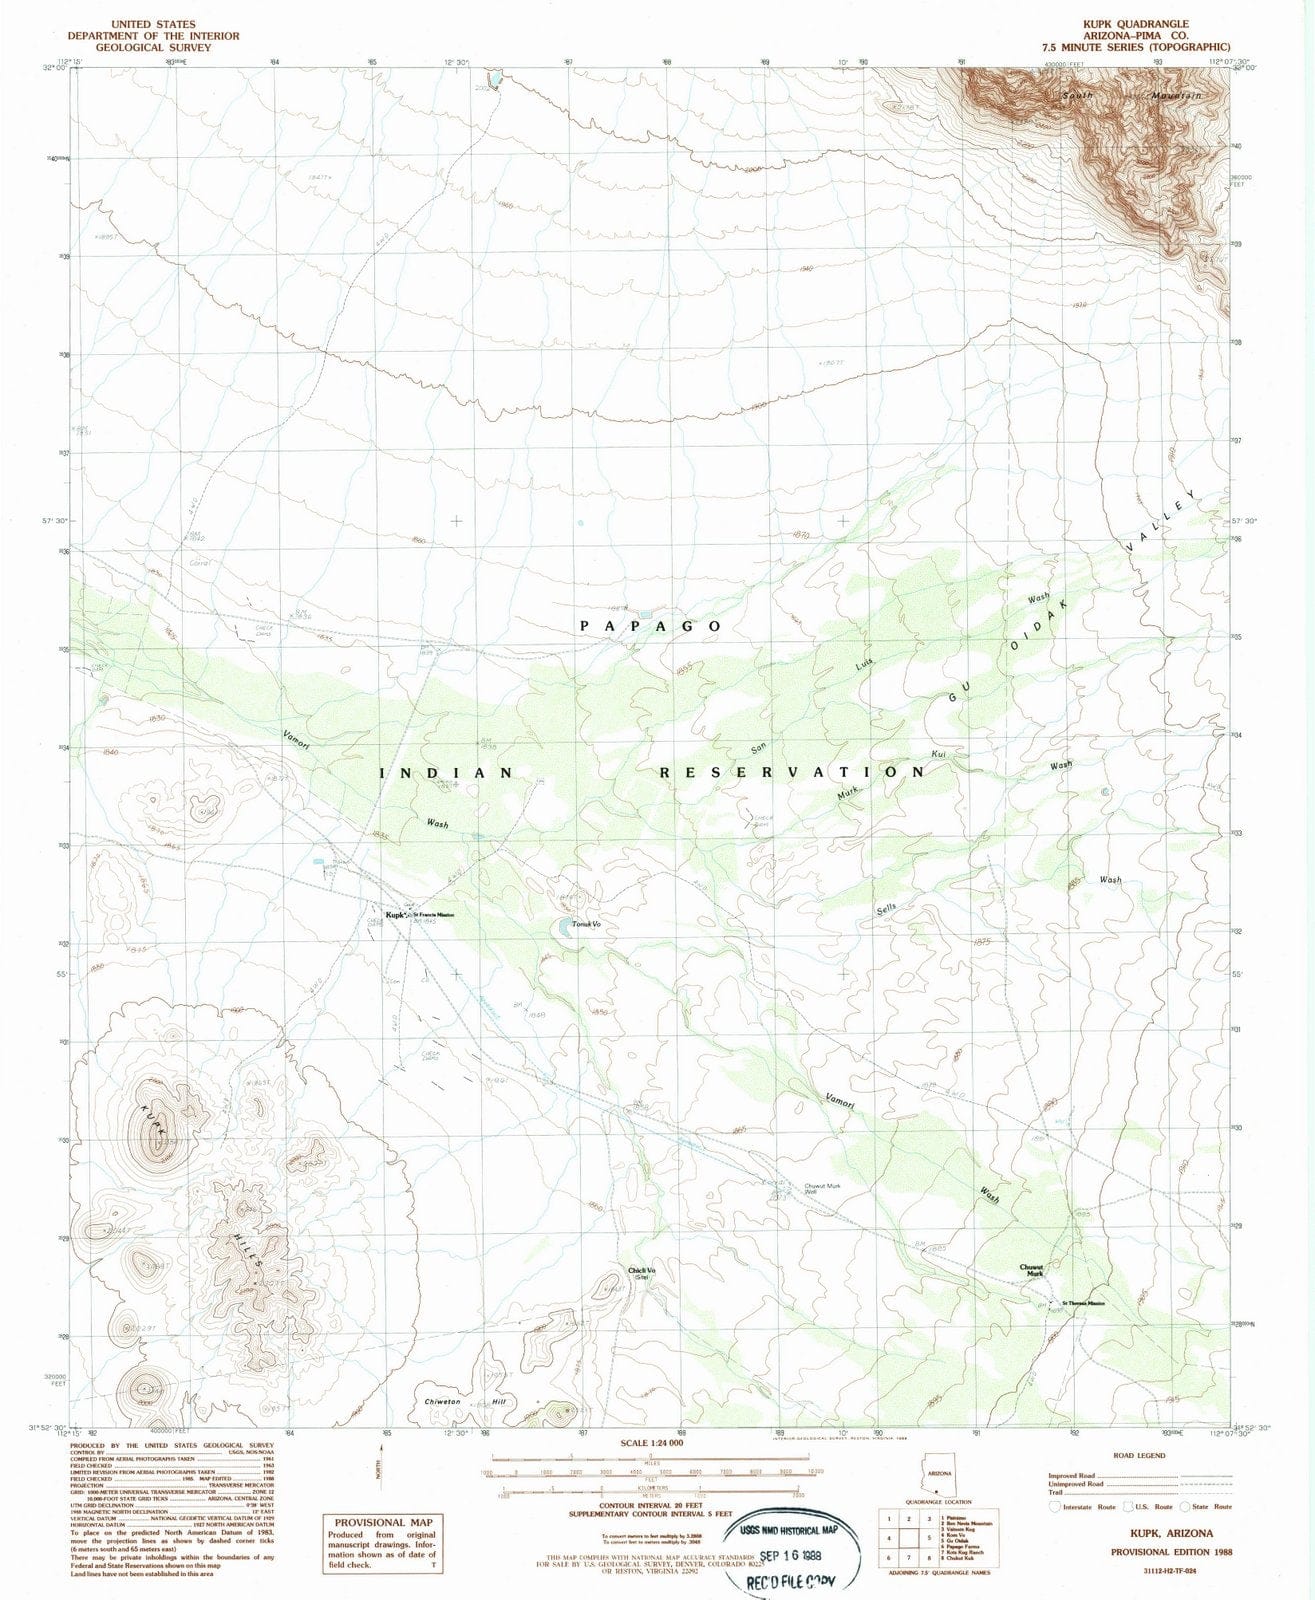 1988 Kupk, AZ - Arizona - USGS Topographic Map